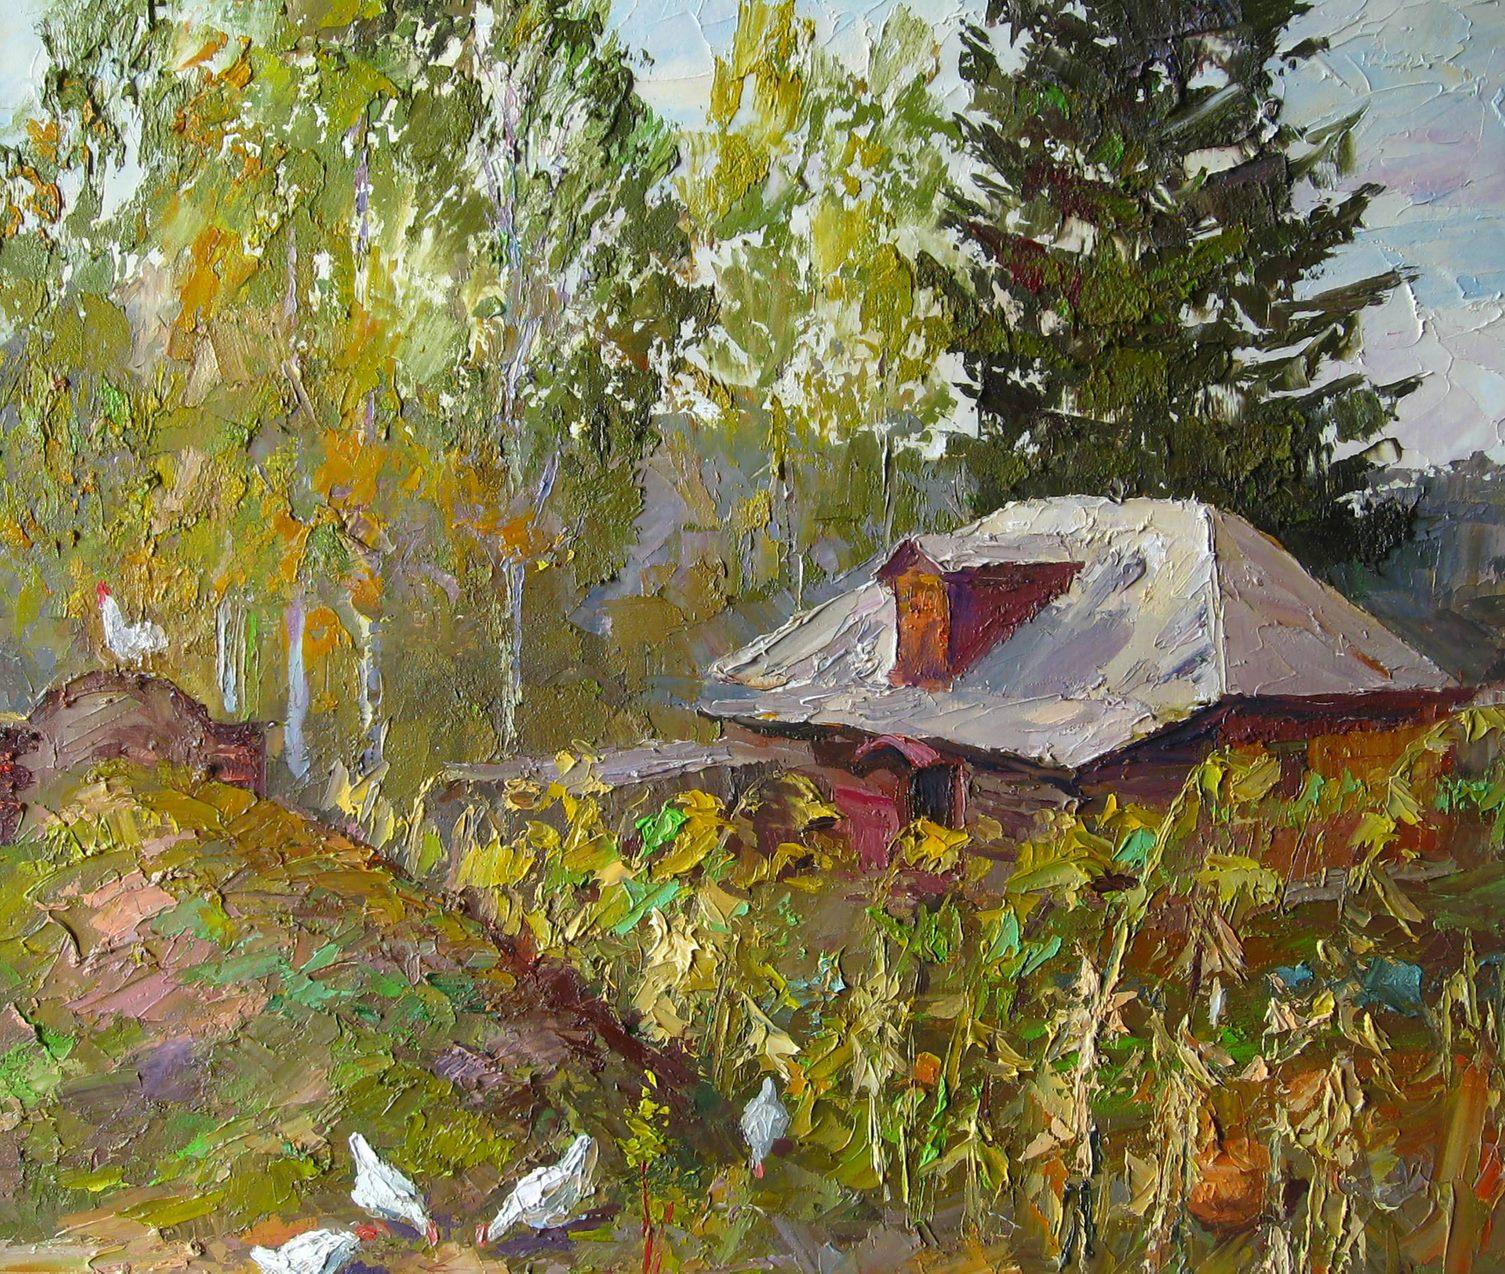 Artist: Boris Serdyuk 
Work: Original oil painting, handmade artwork, one of a kind 
Medium: Oil on Canvas
Style: Impressionism
Year: 2020
Title: Sunflowers
Size: 19.5